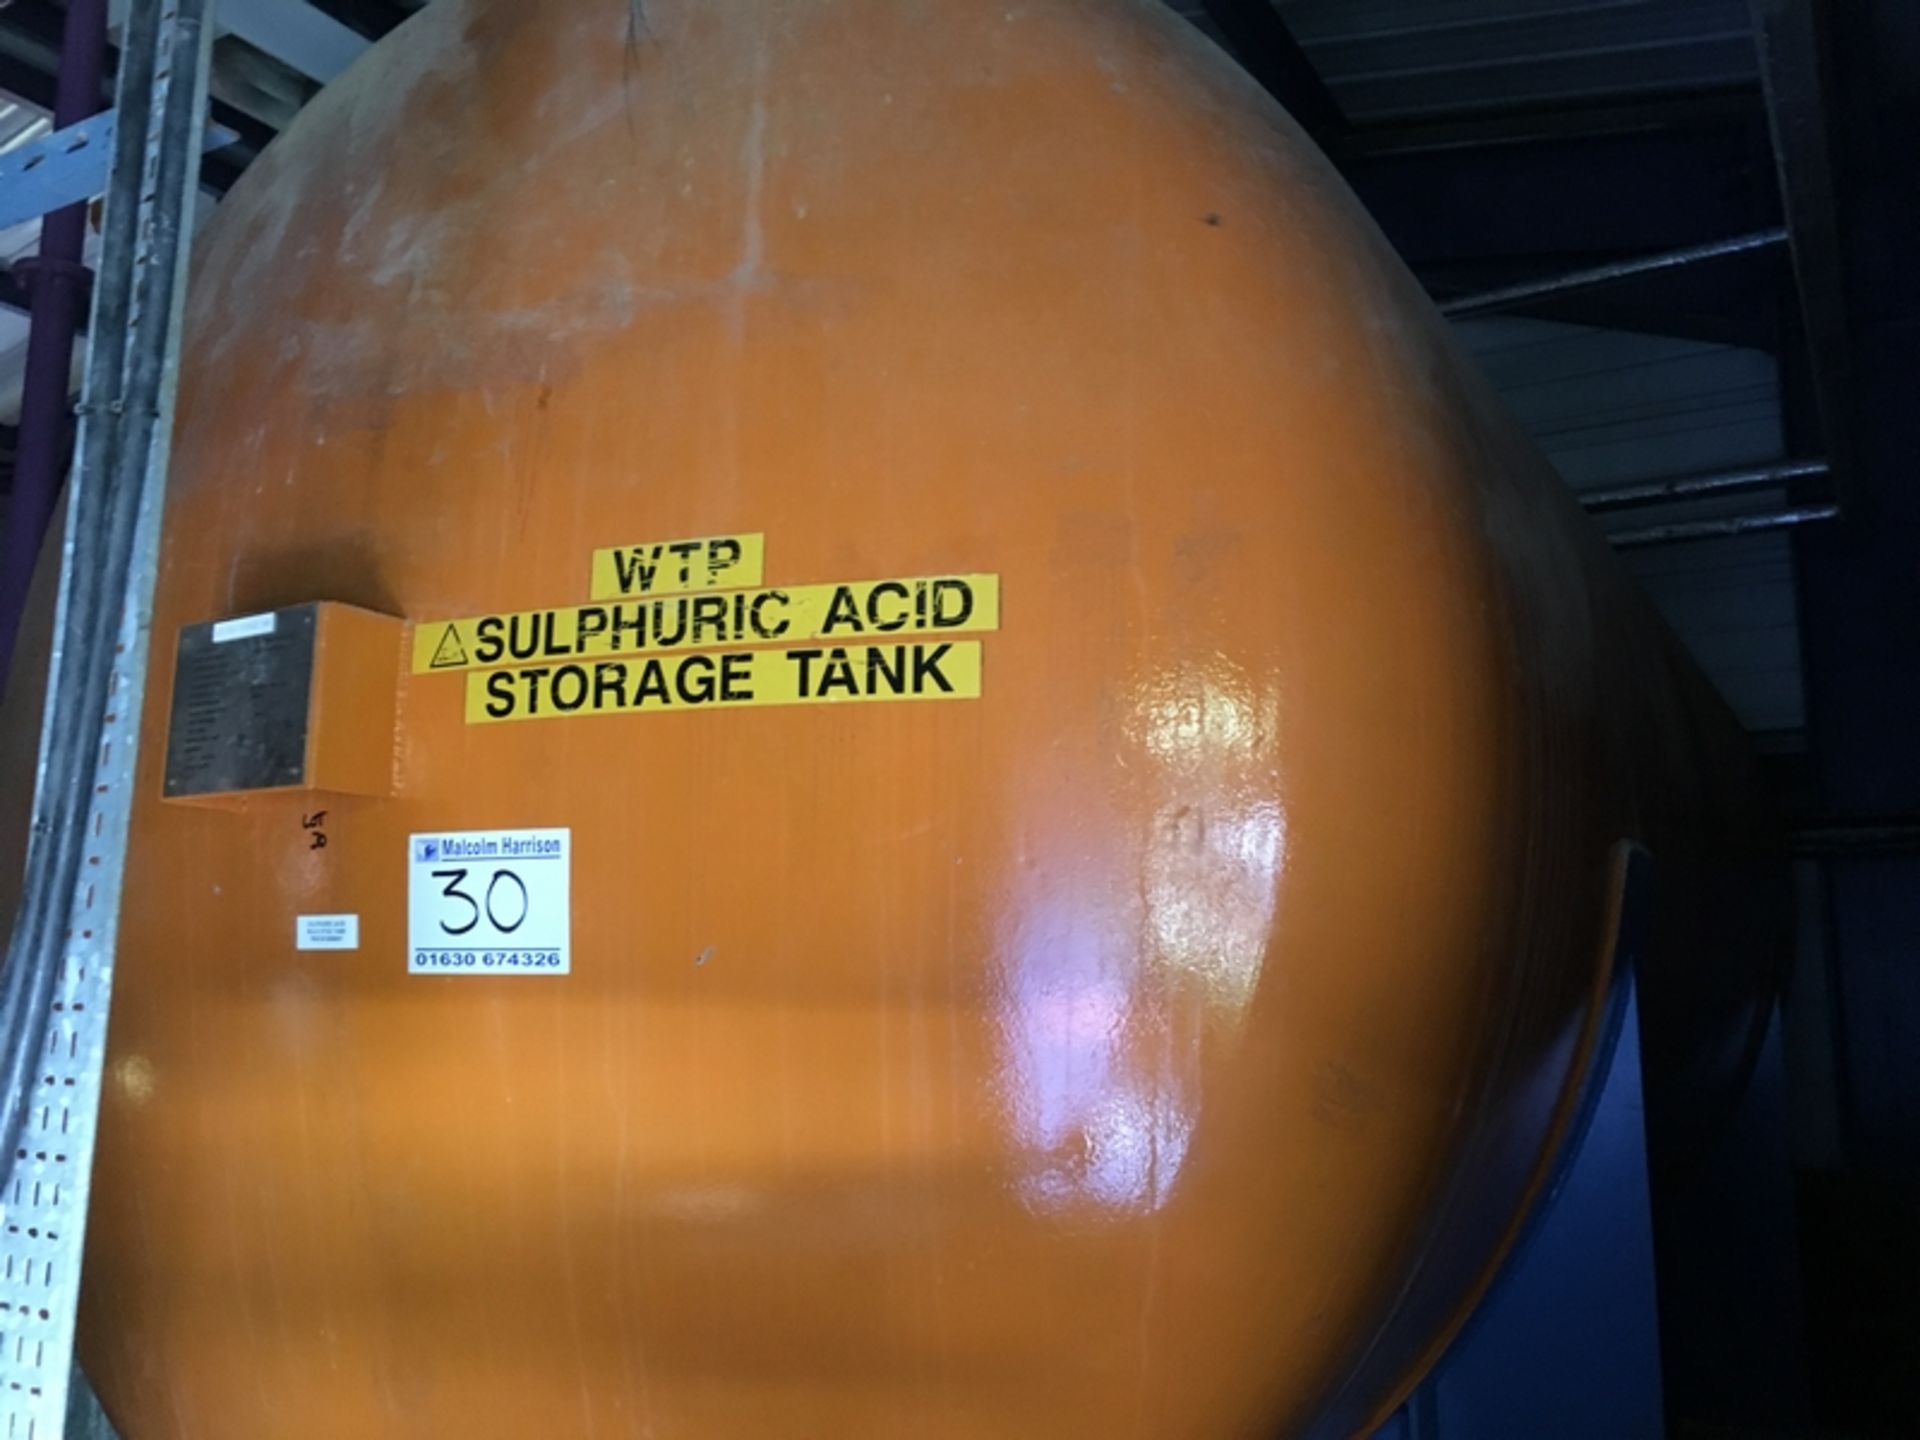 WTP Sulphuric Acid Storage Tank